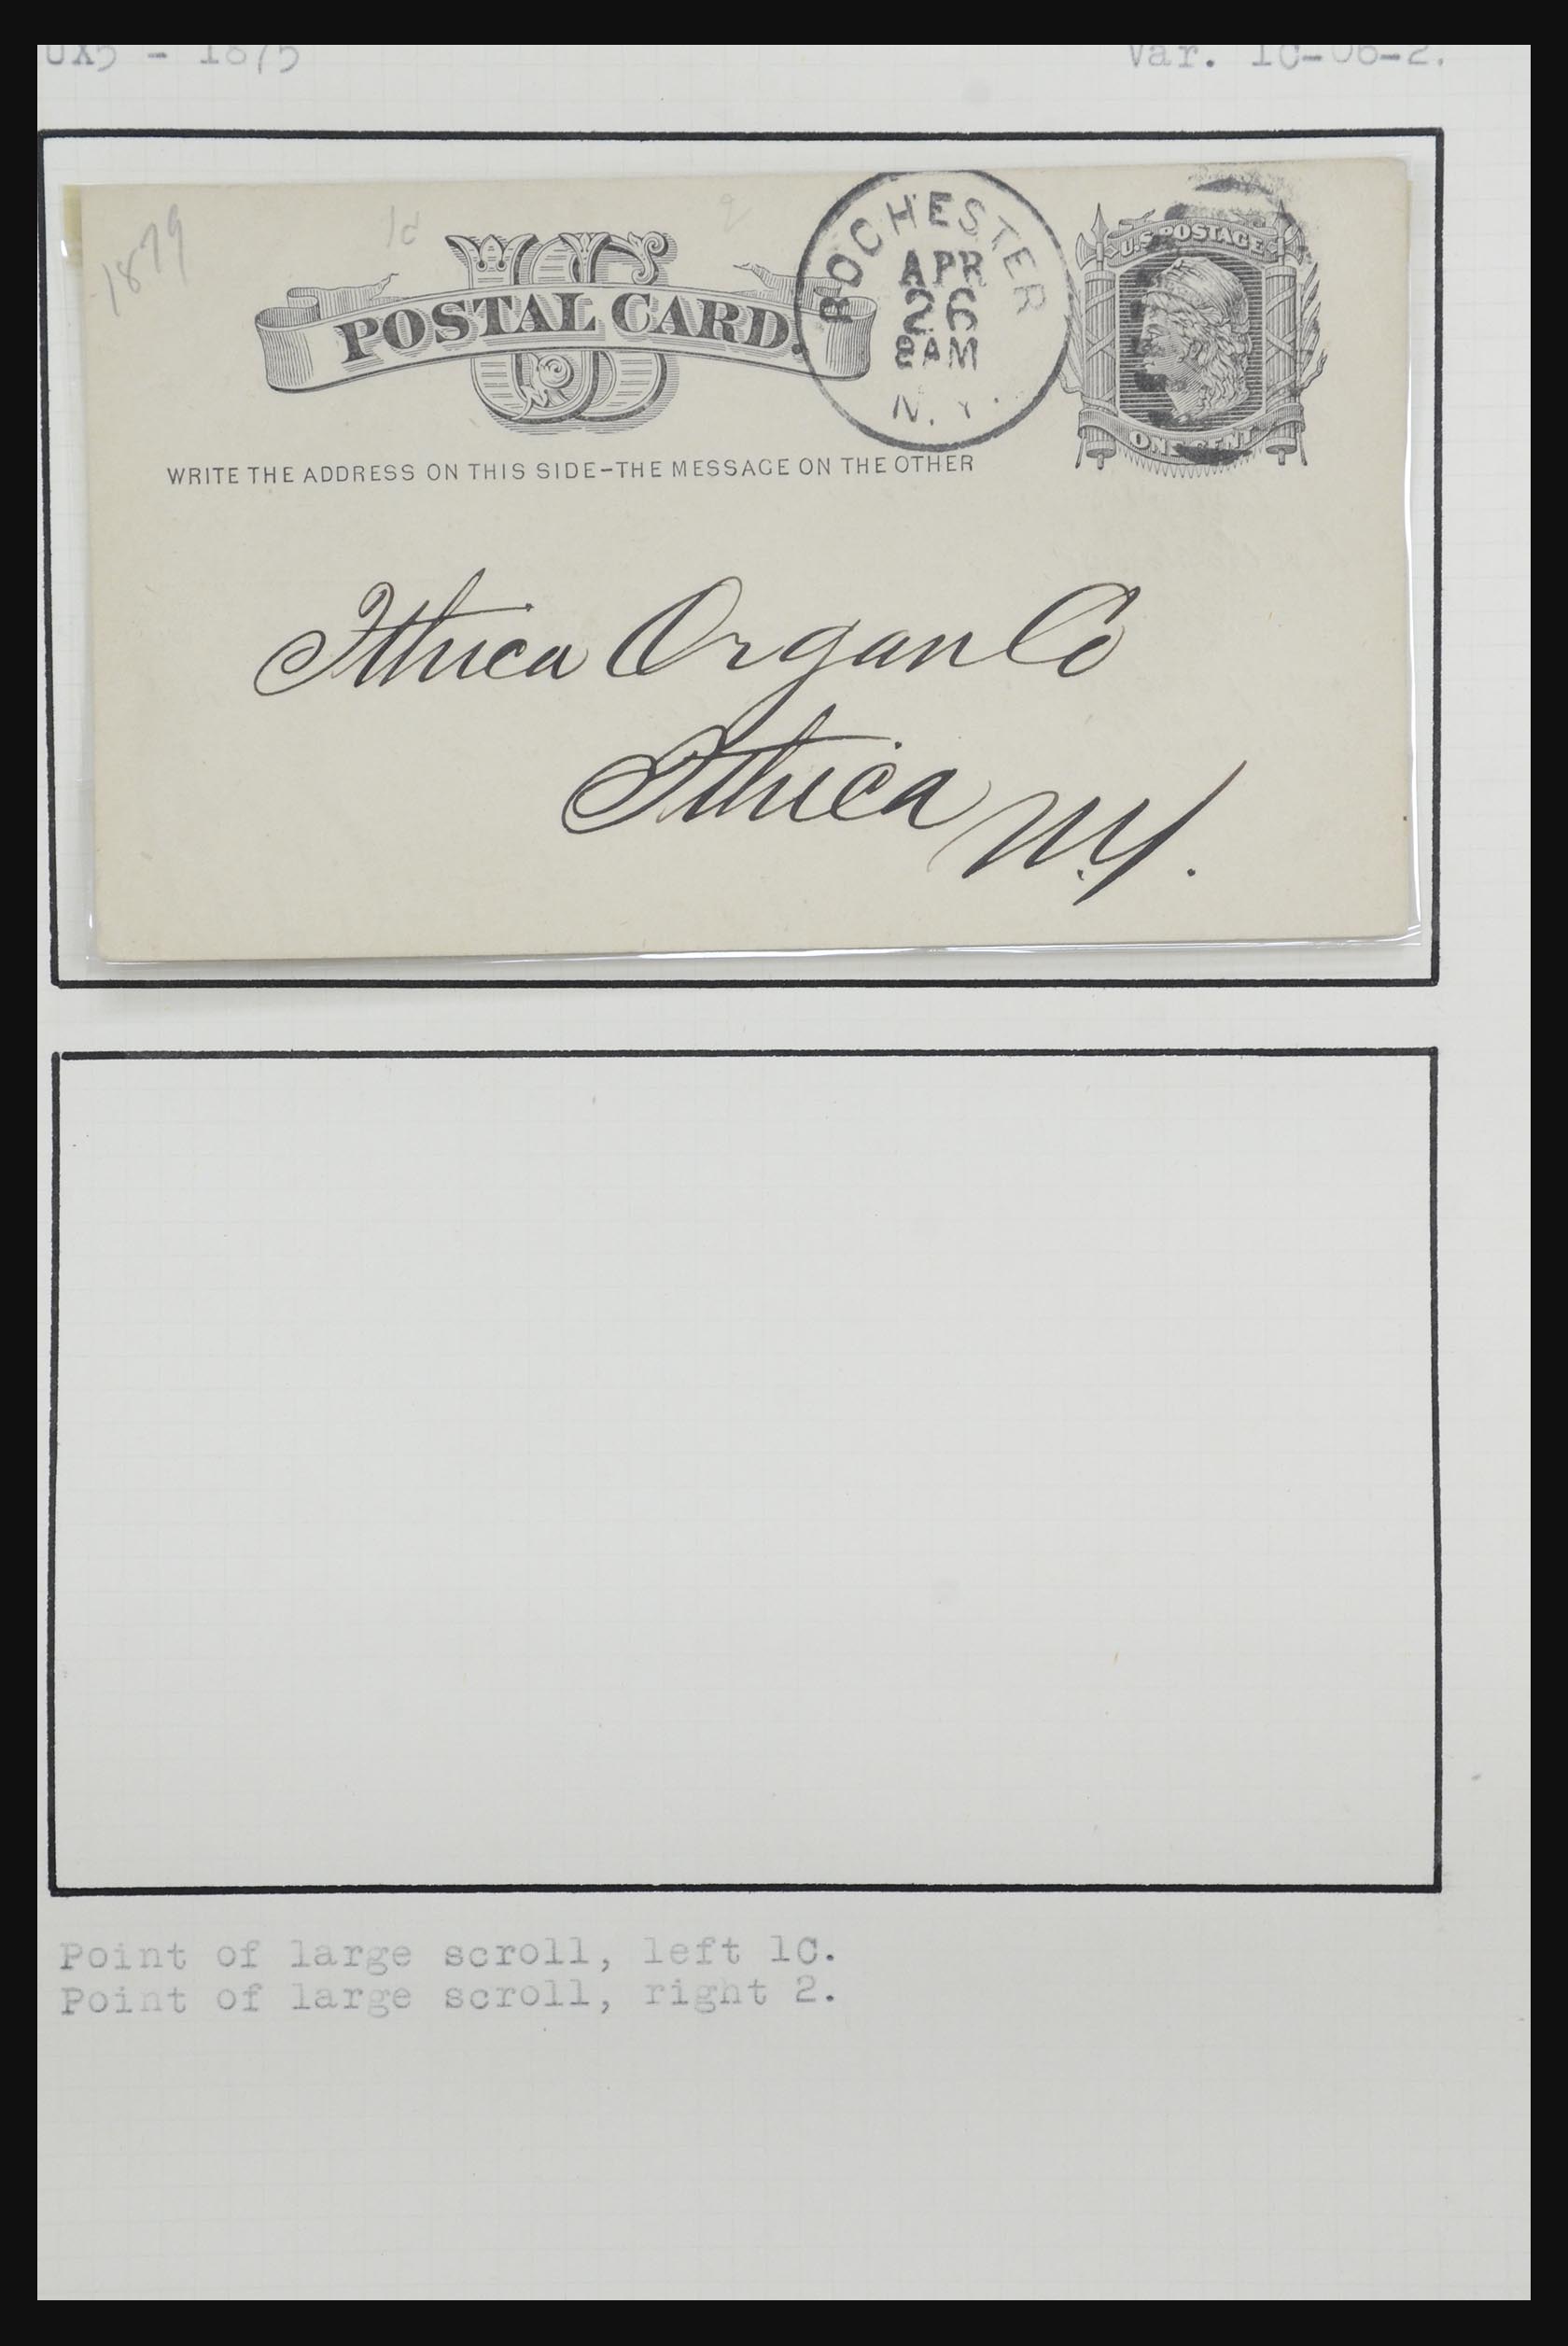 32209 055 - 32209 USA postal cards 1873-1950.